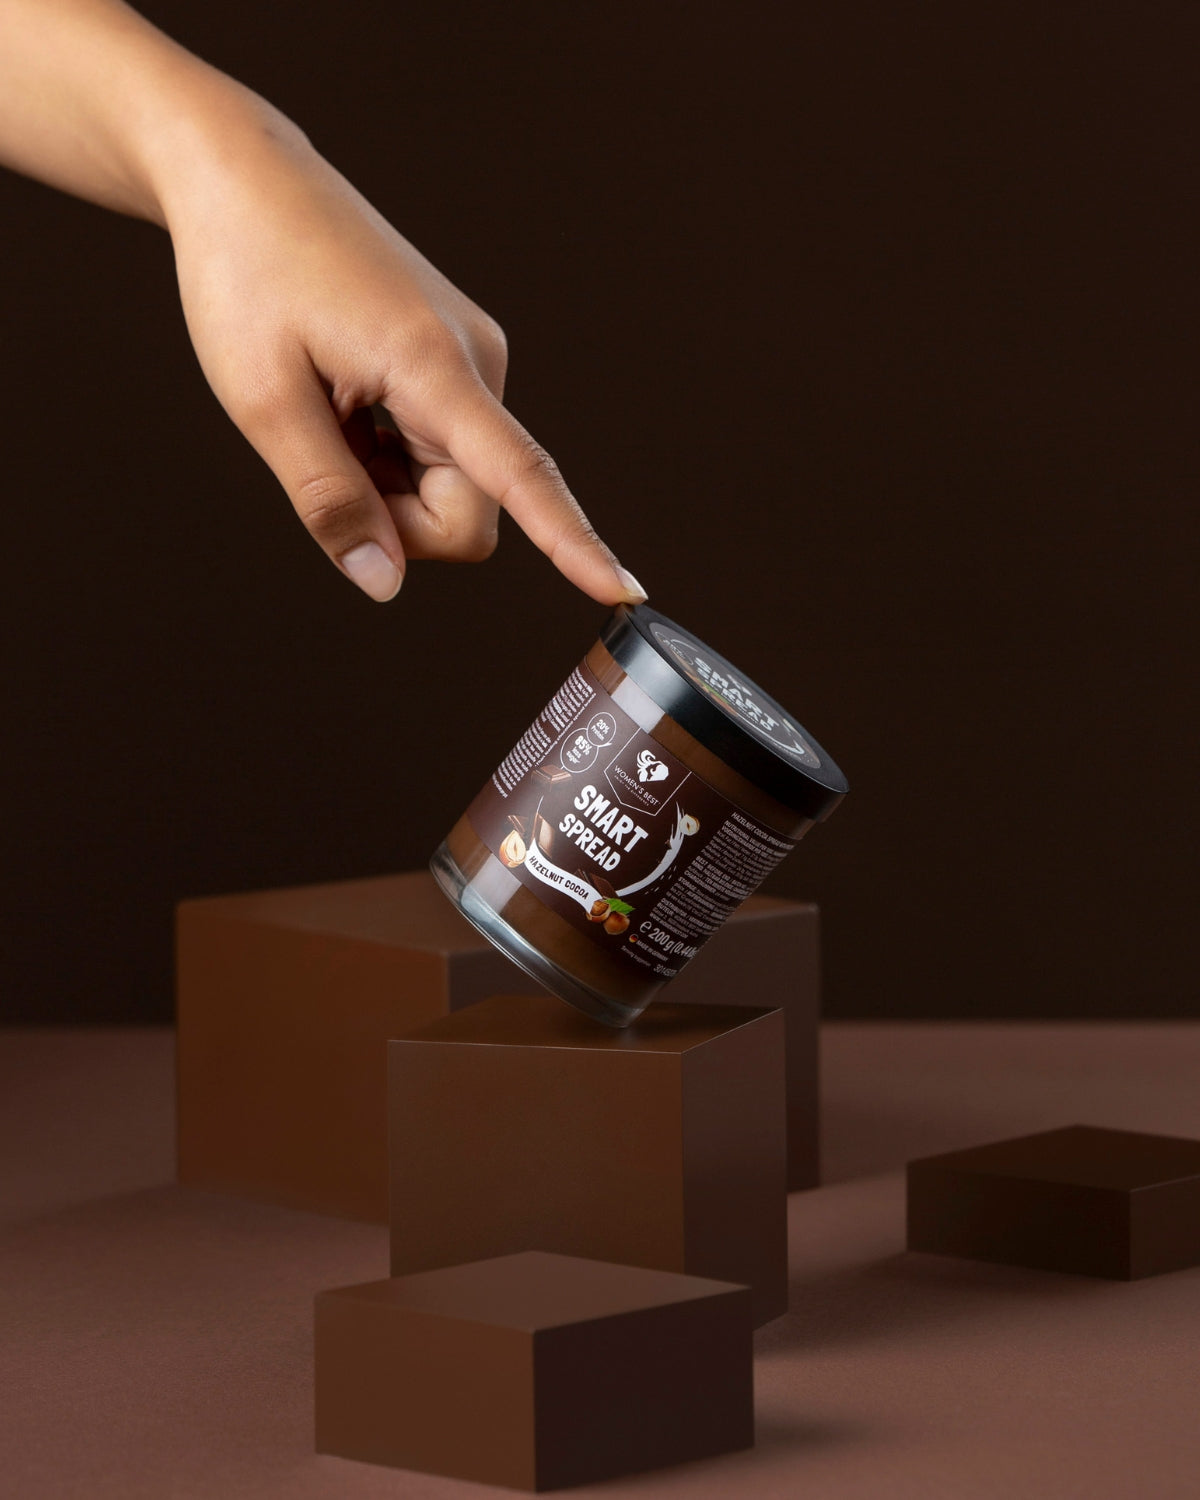 Smart Spread- crema tartinabila de ciocolata 200g Women's Best